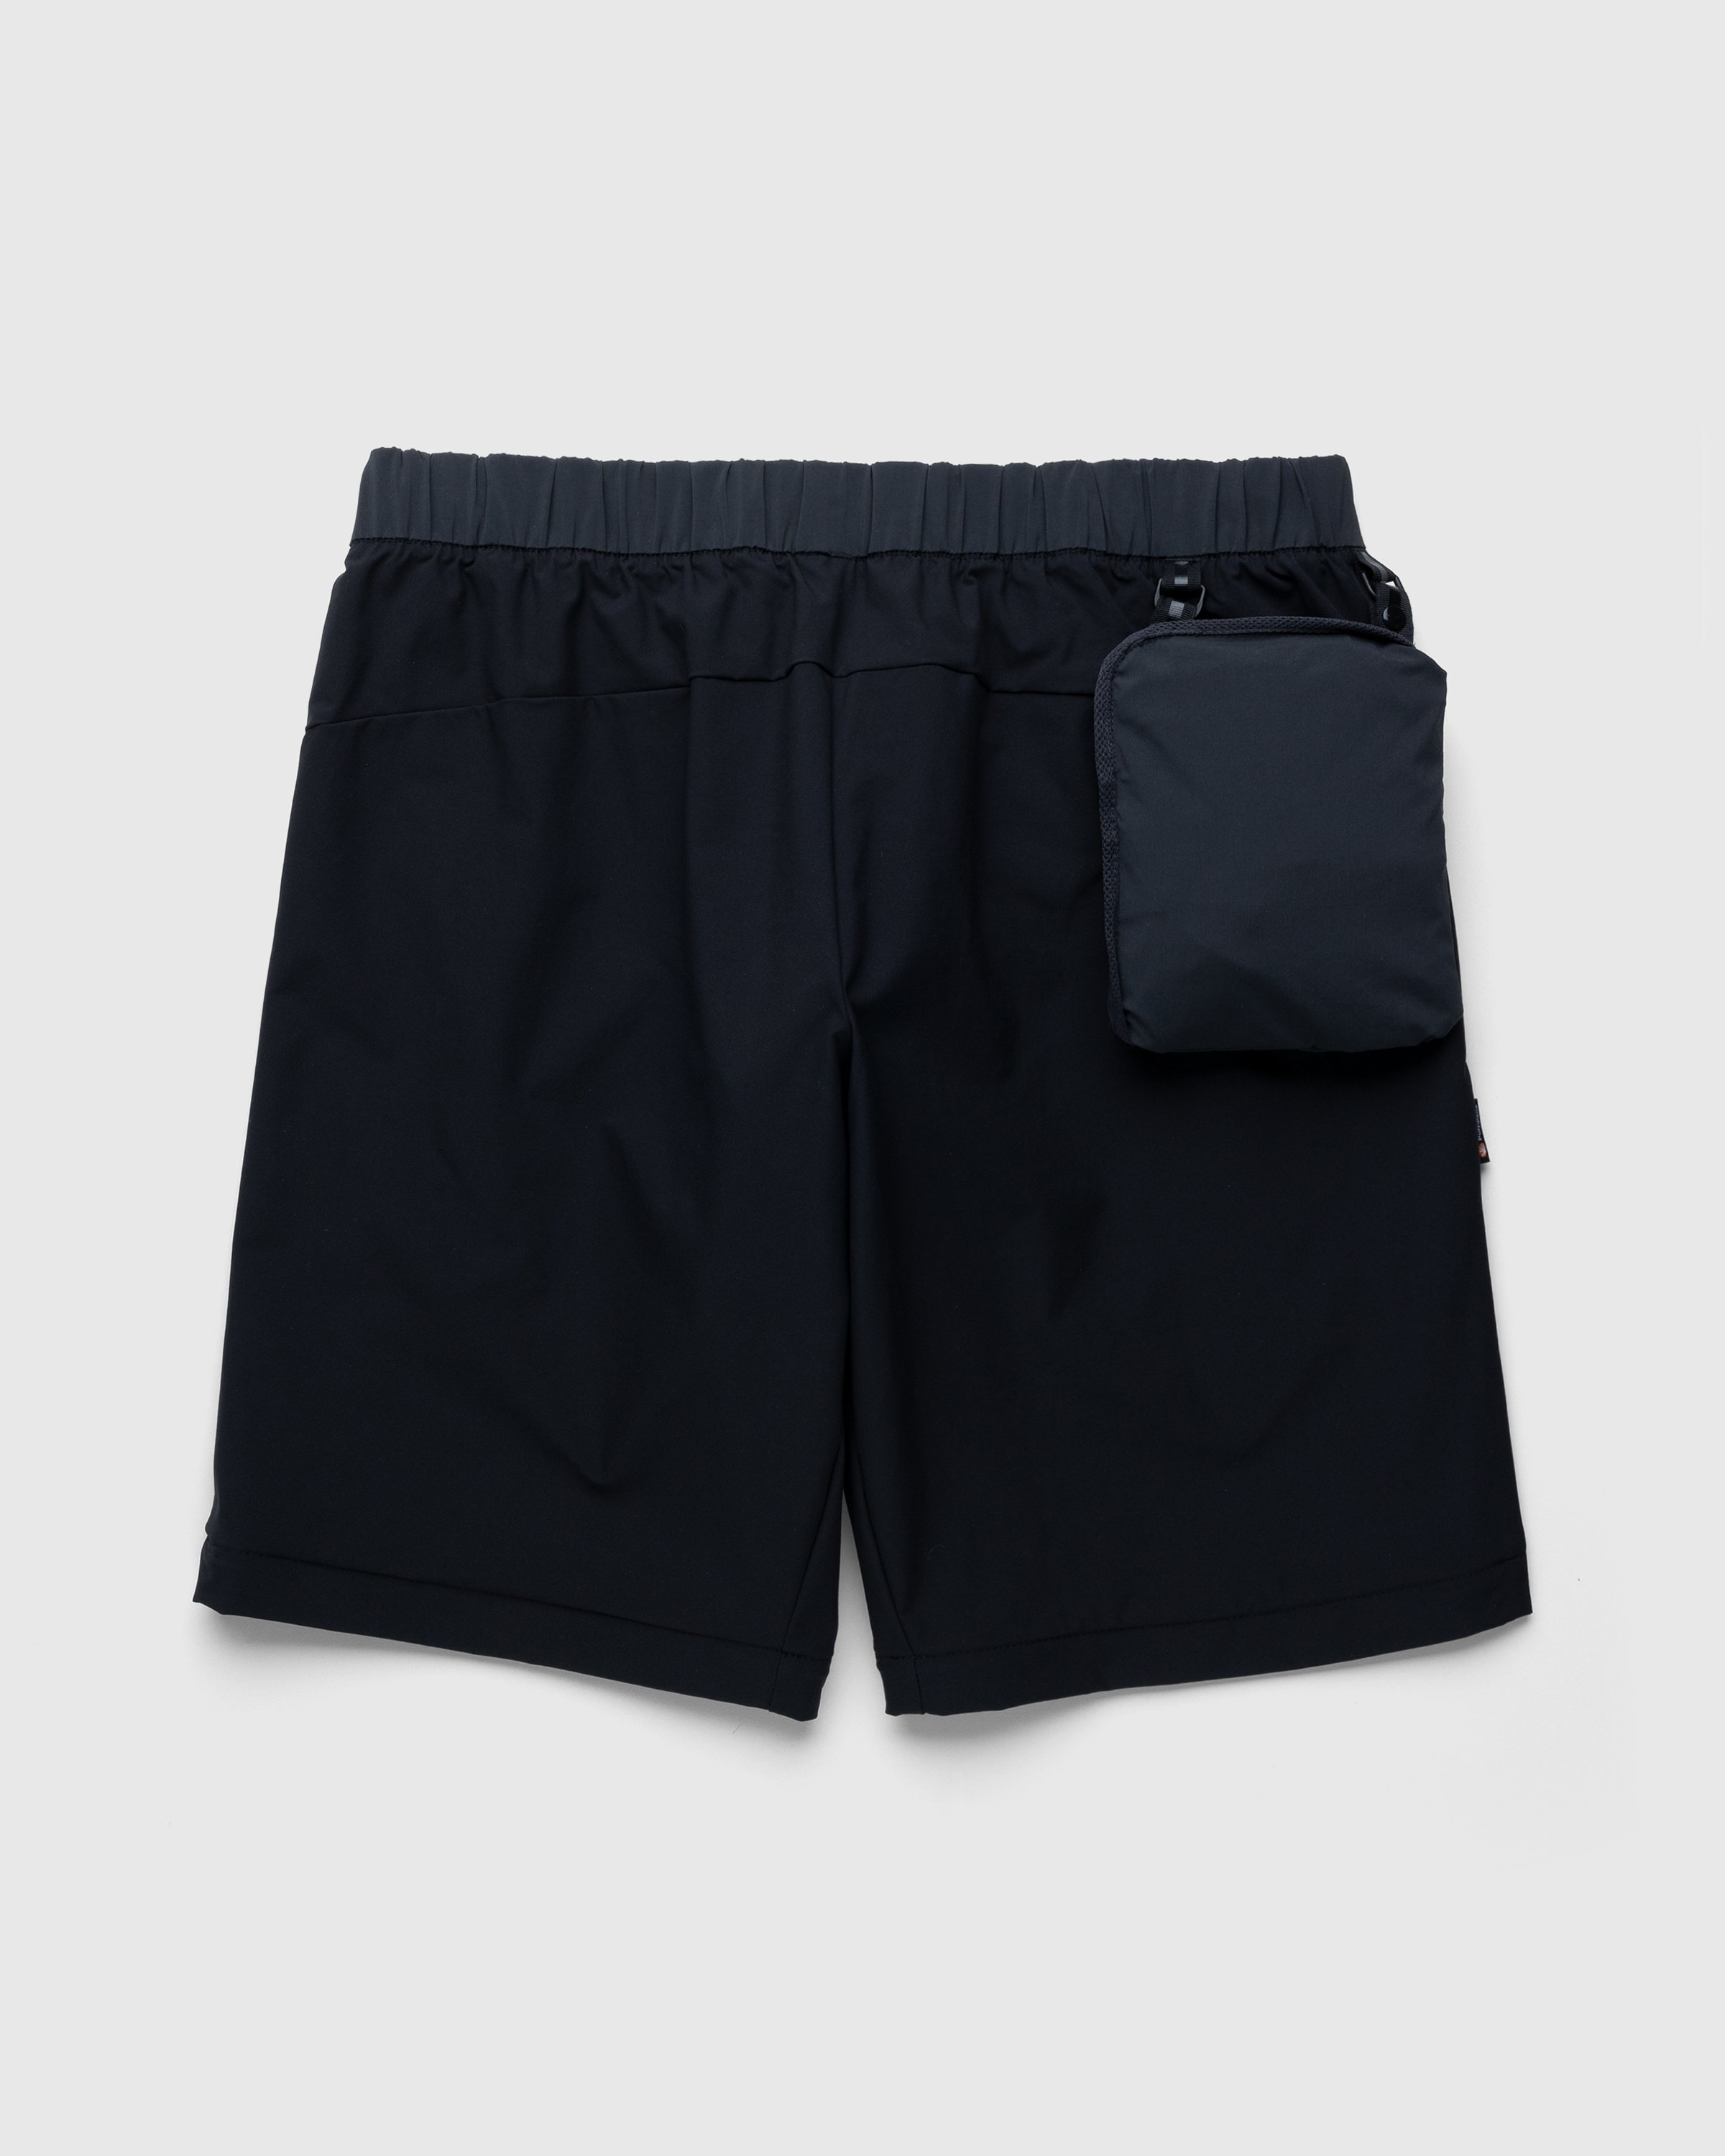 Adidas - Voyager Pants Black/Carbon - Clothing - Black - Image 3